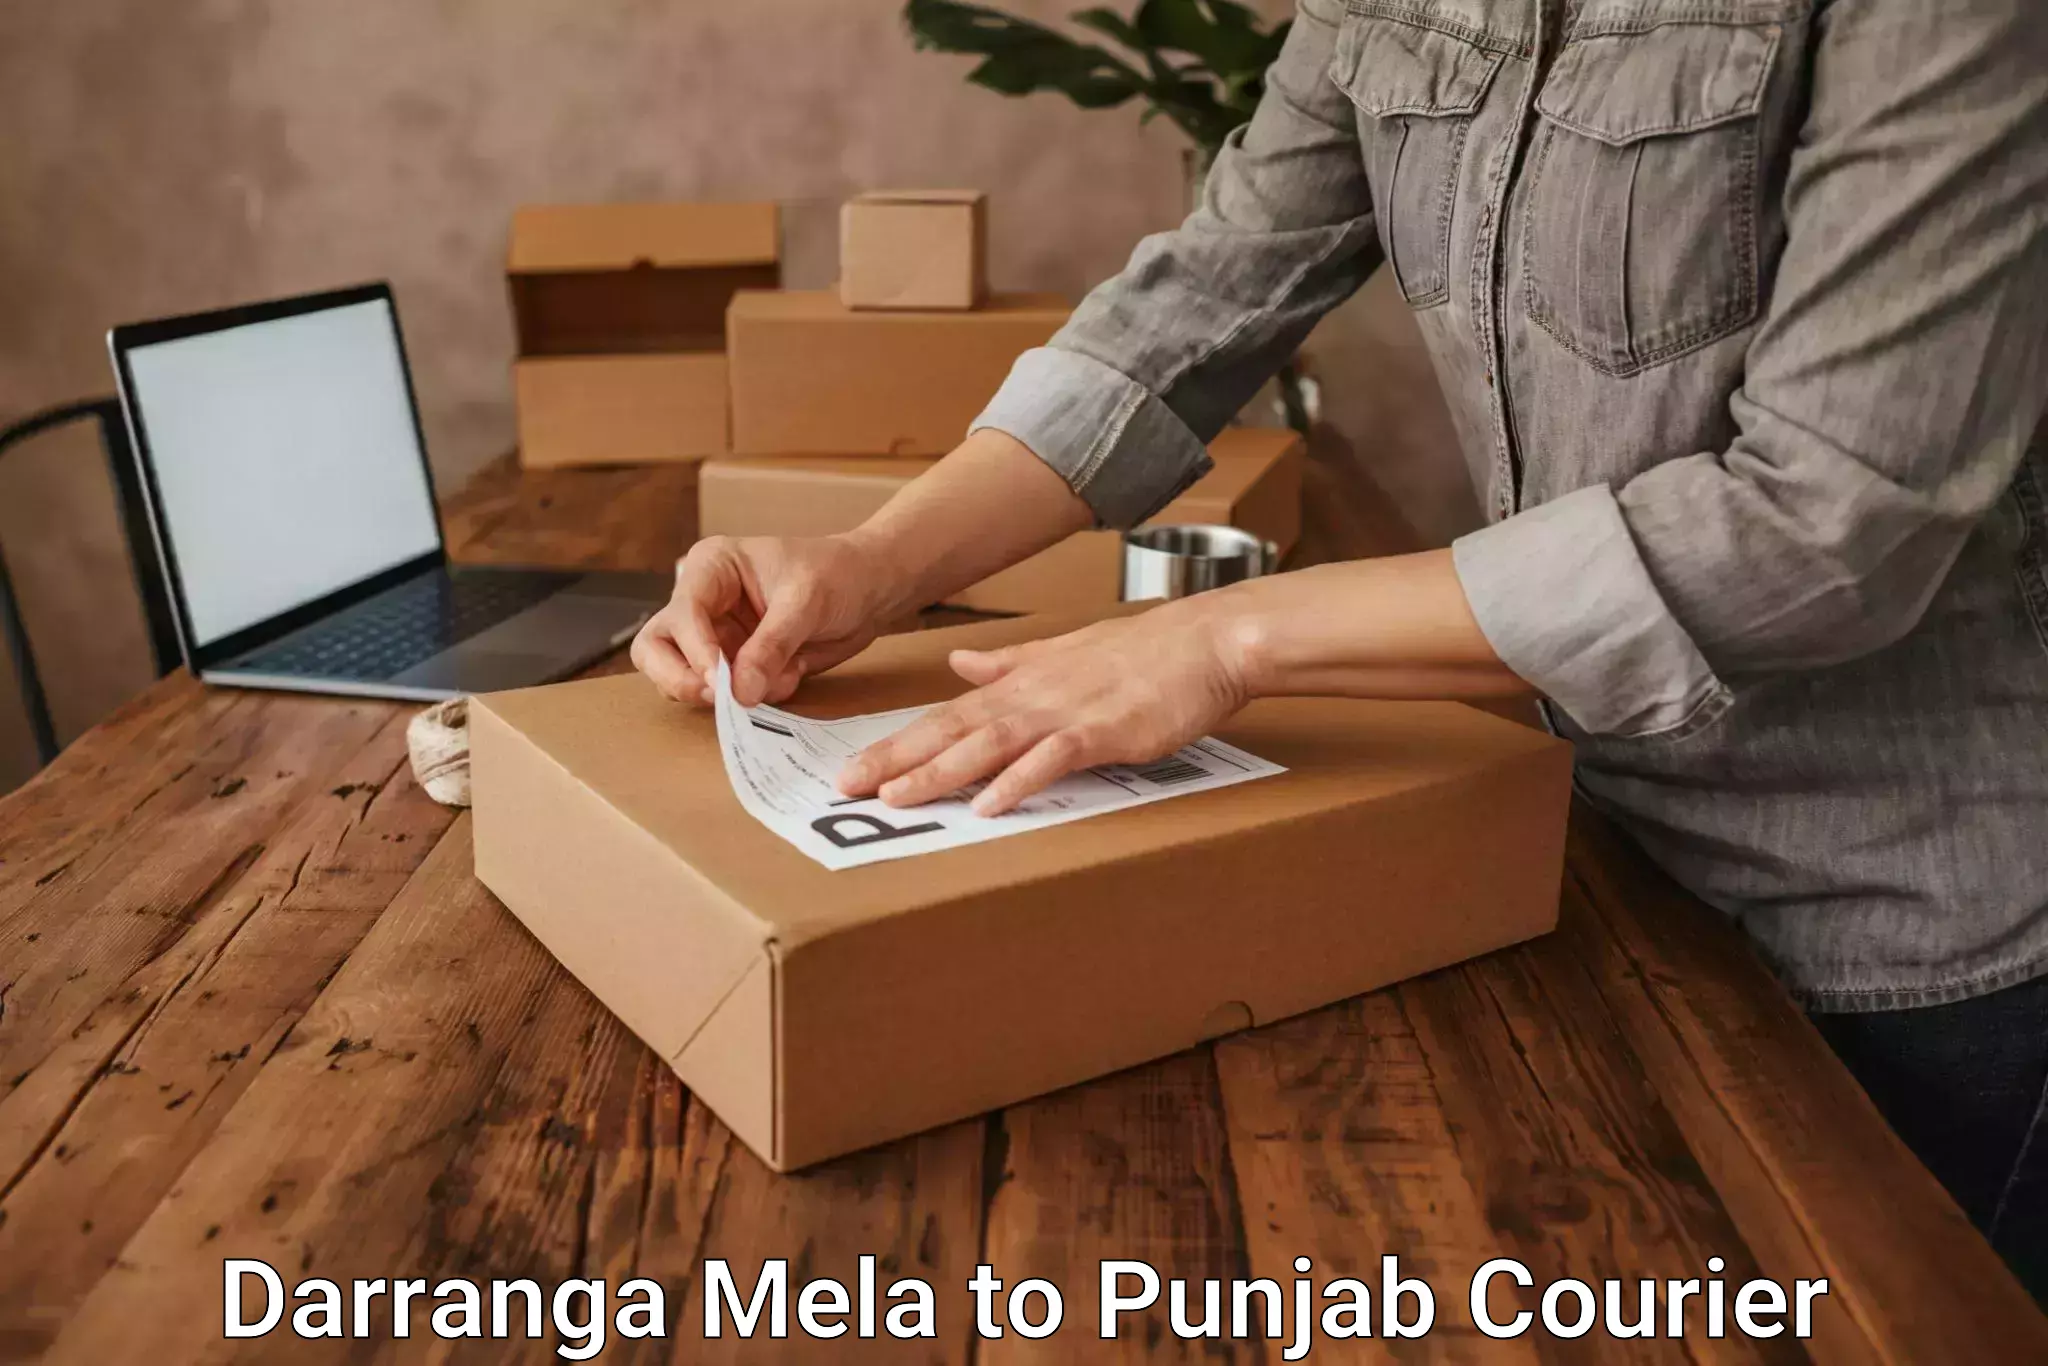 Courier service partnerships Darranga Mela to Firozpur